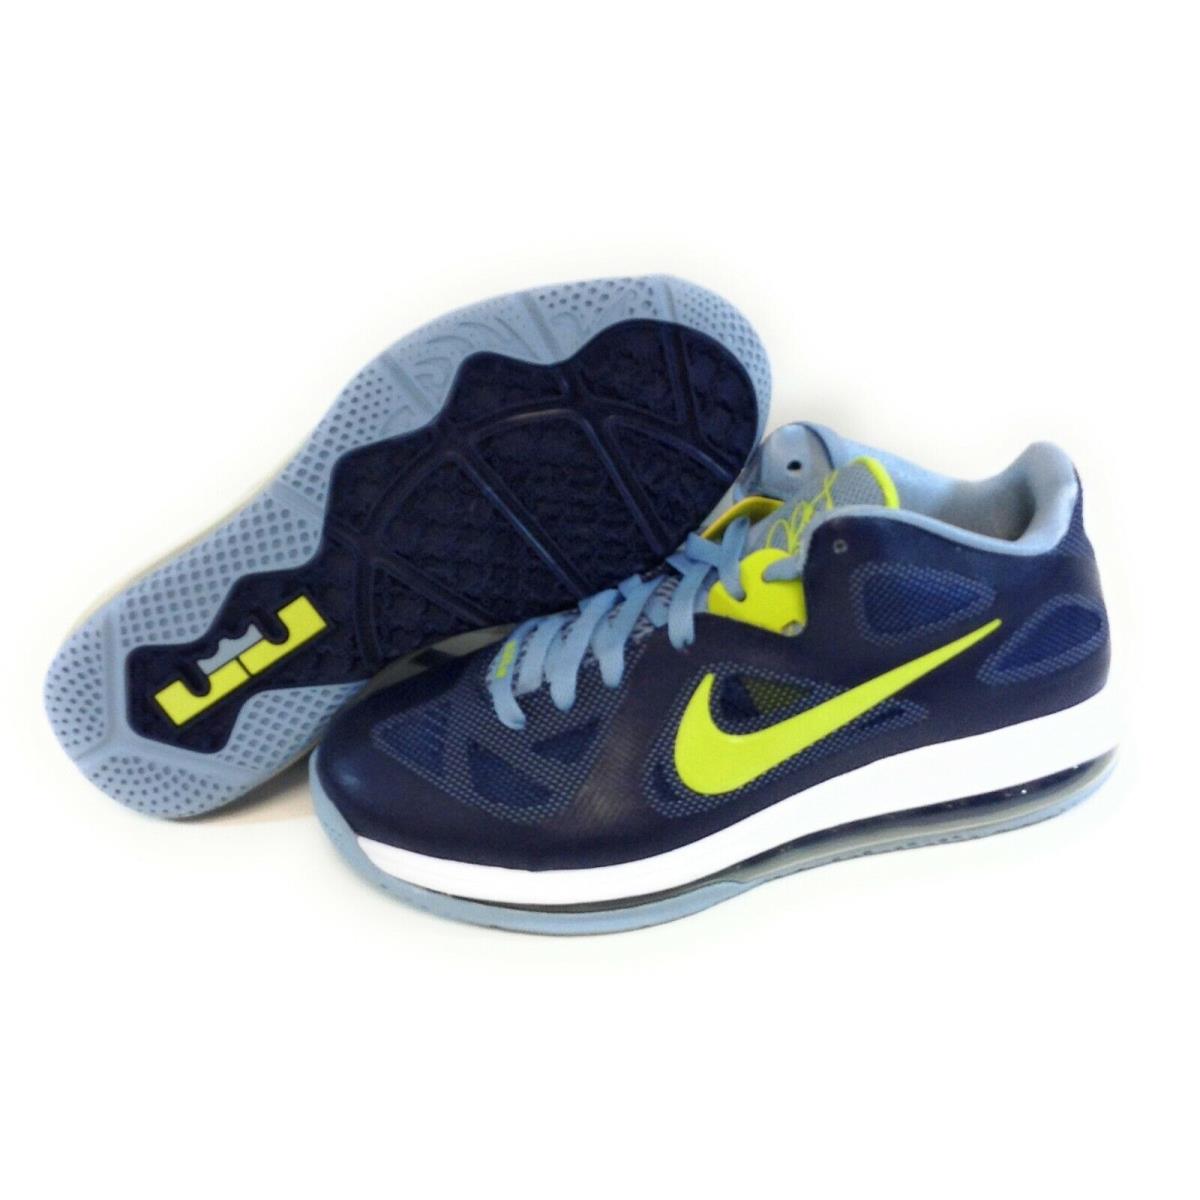 Mens Nike Lebron 9 Low 510811 401 Obsidian Cyber 2011 Deadstock Sneakers Shoes - Blue , Obsidian Manufacturer